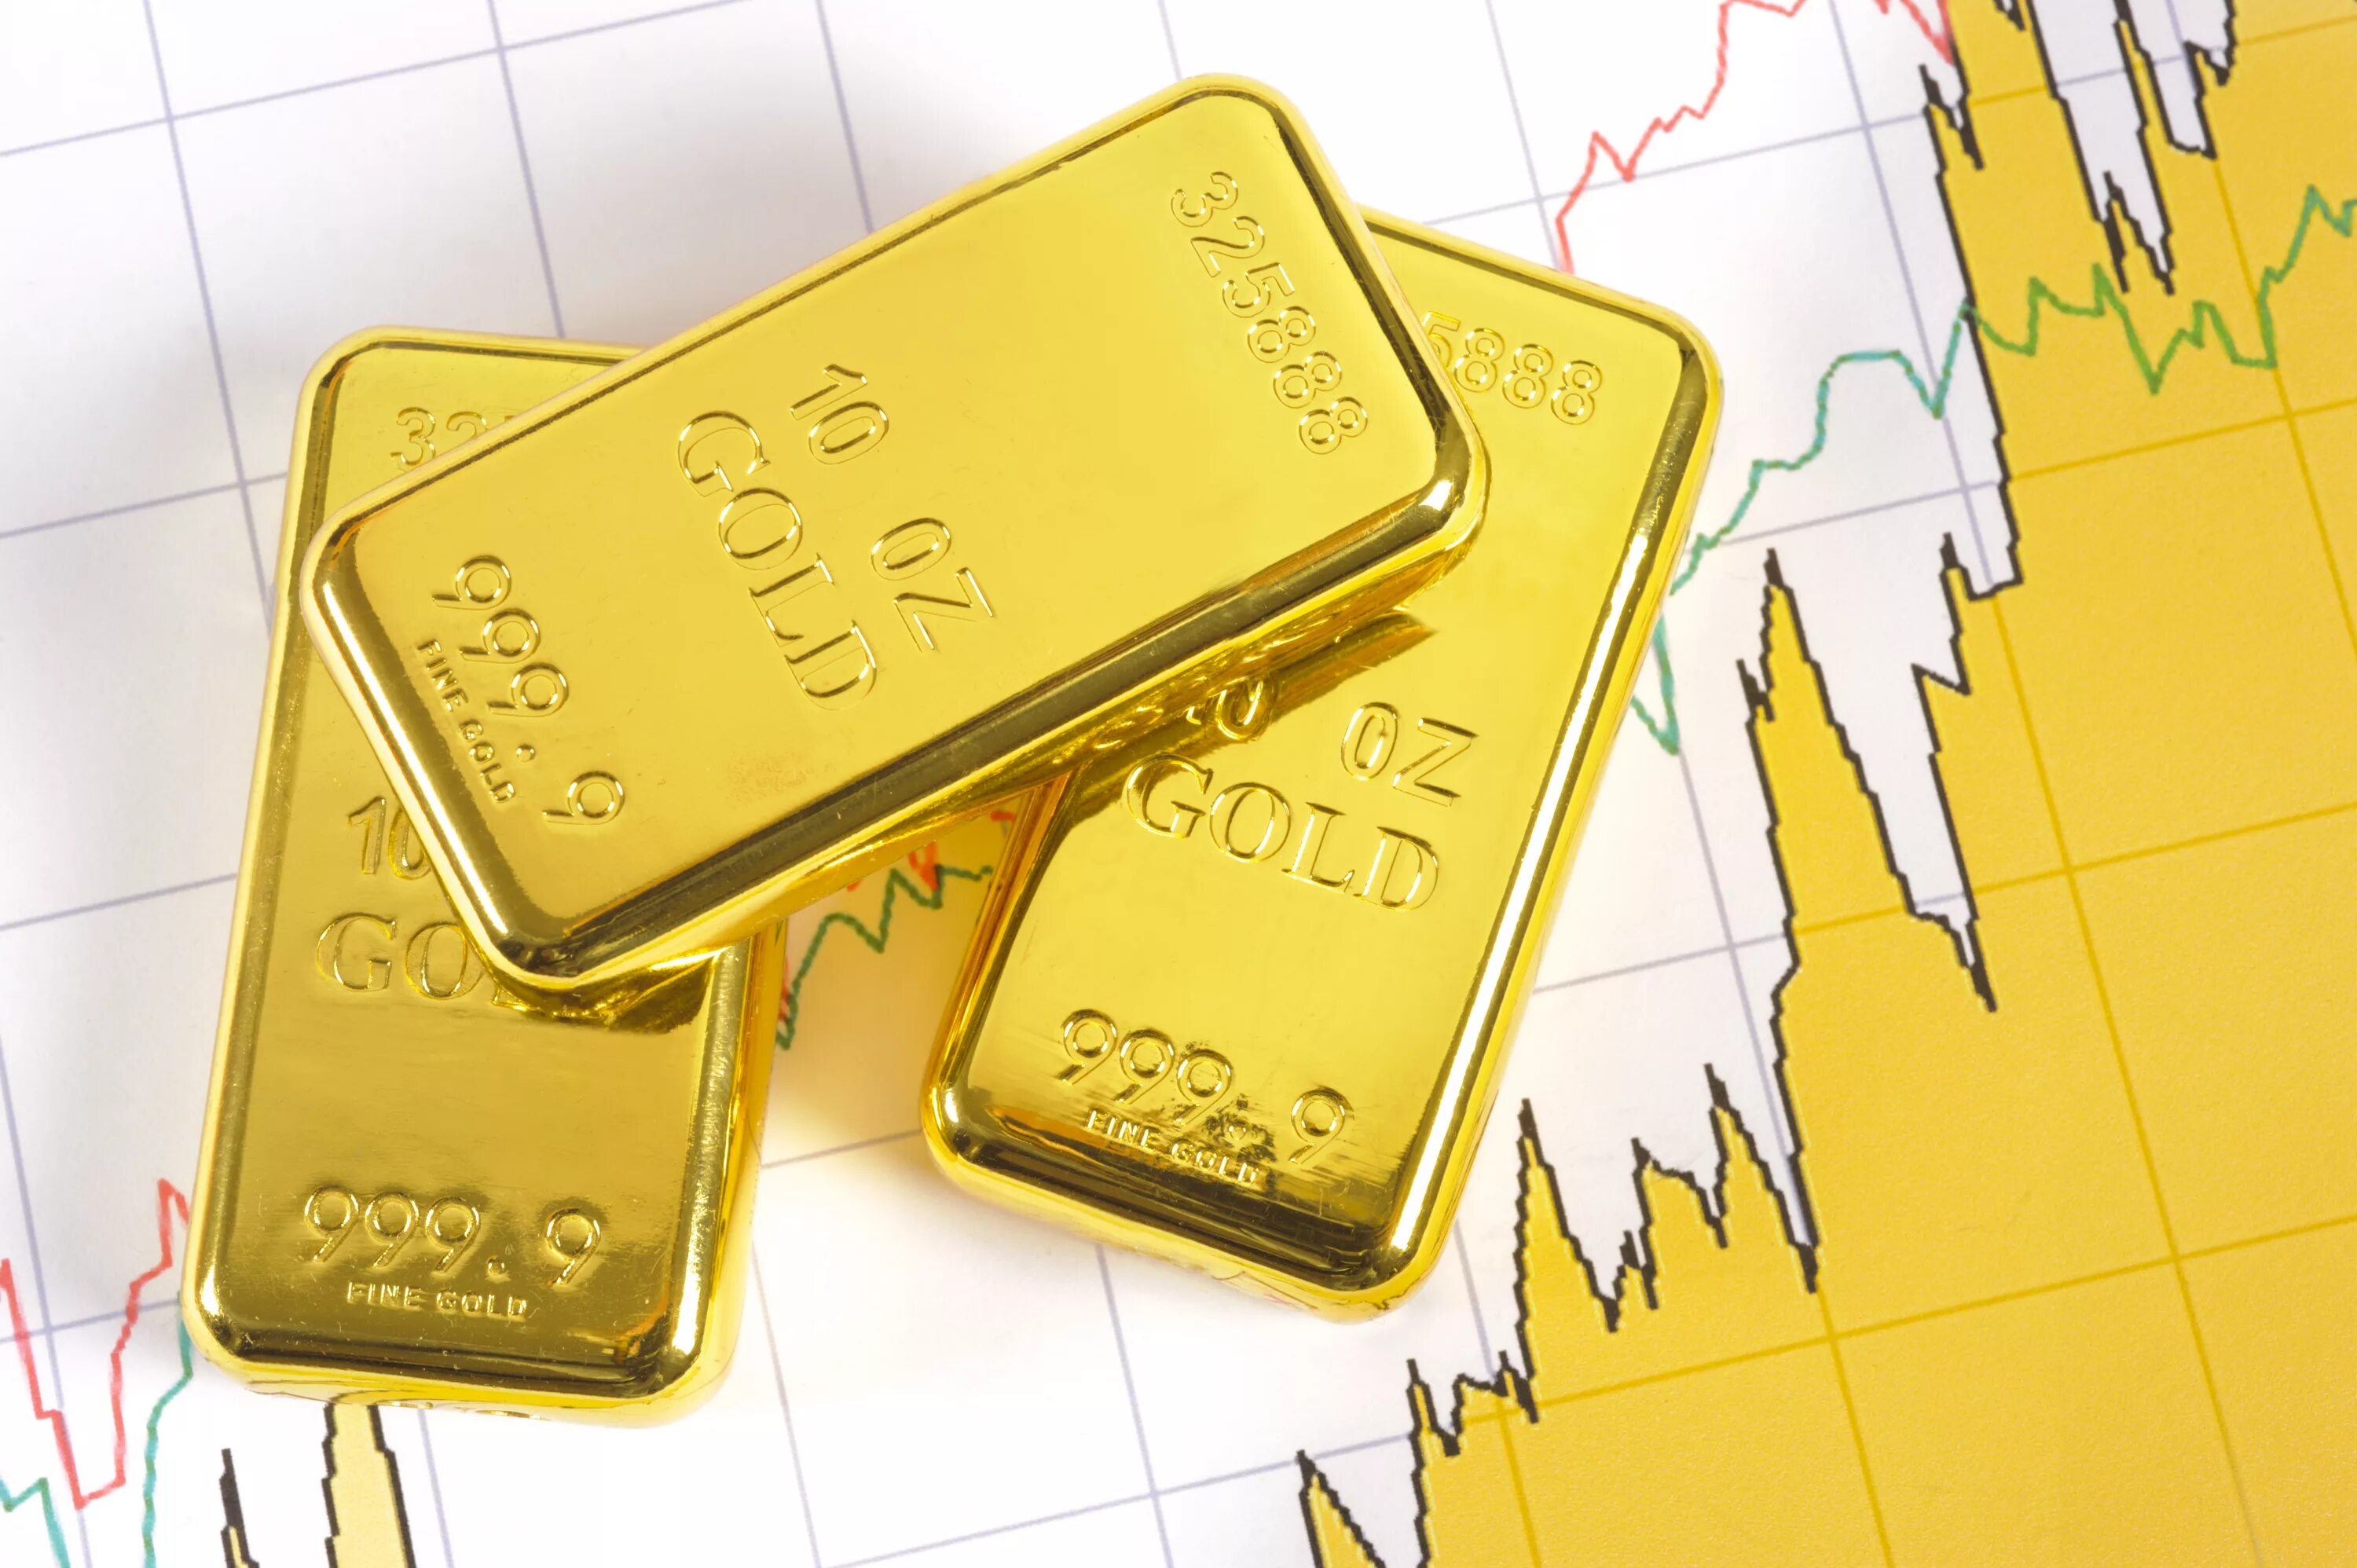 Слиток золота. Инвестиции в золото. Слиток золотой. Инвестирование в драгоценные металлы. Драгоценные металлы и иностранная валюта